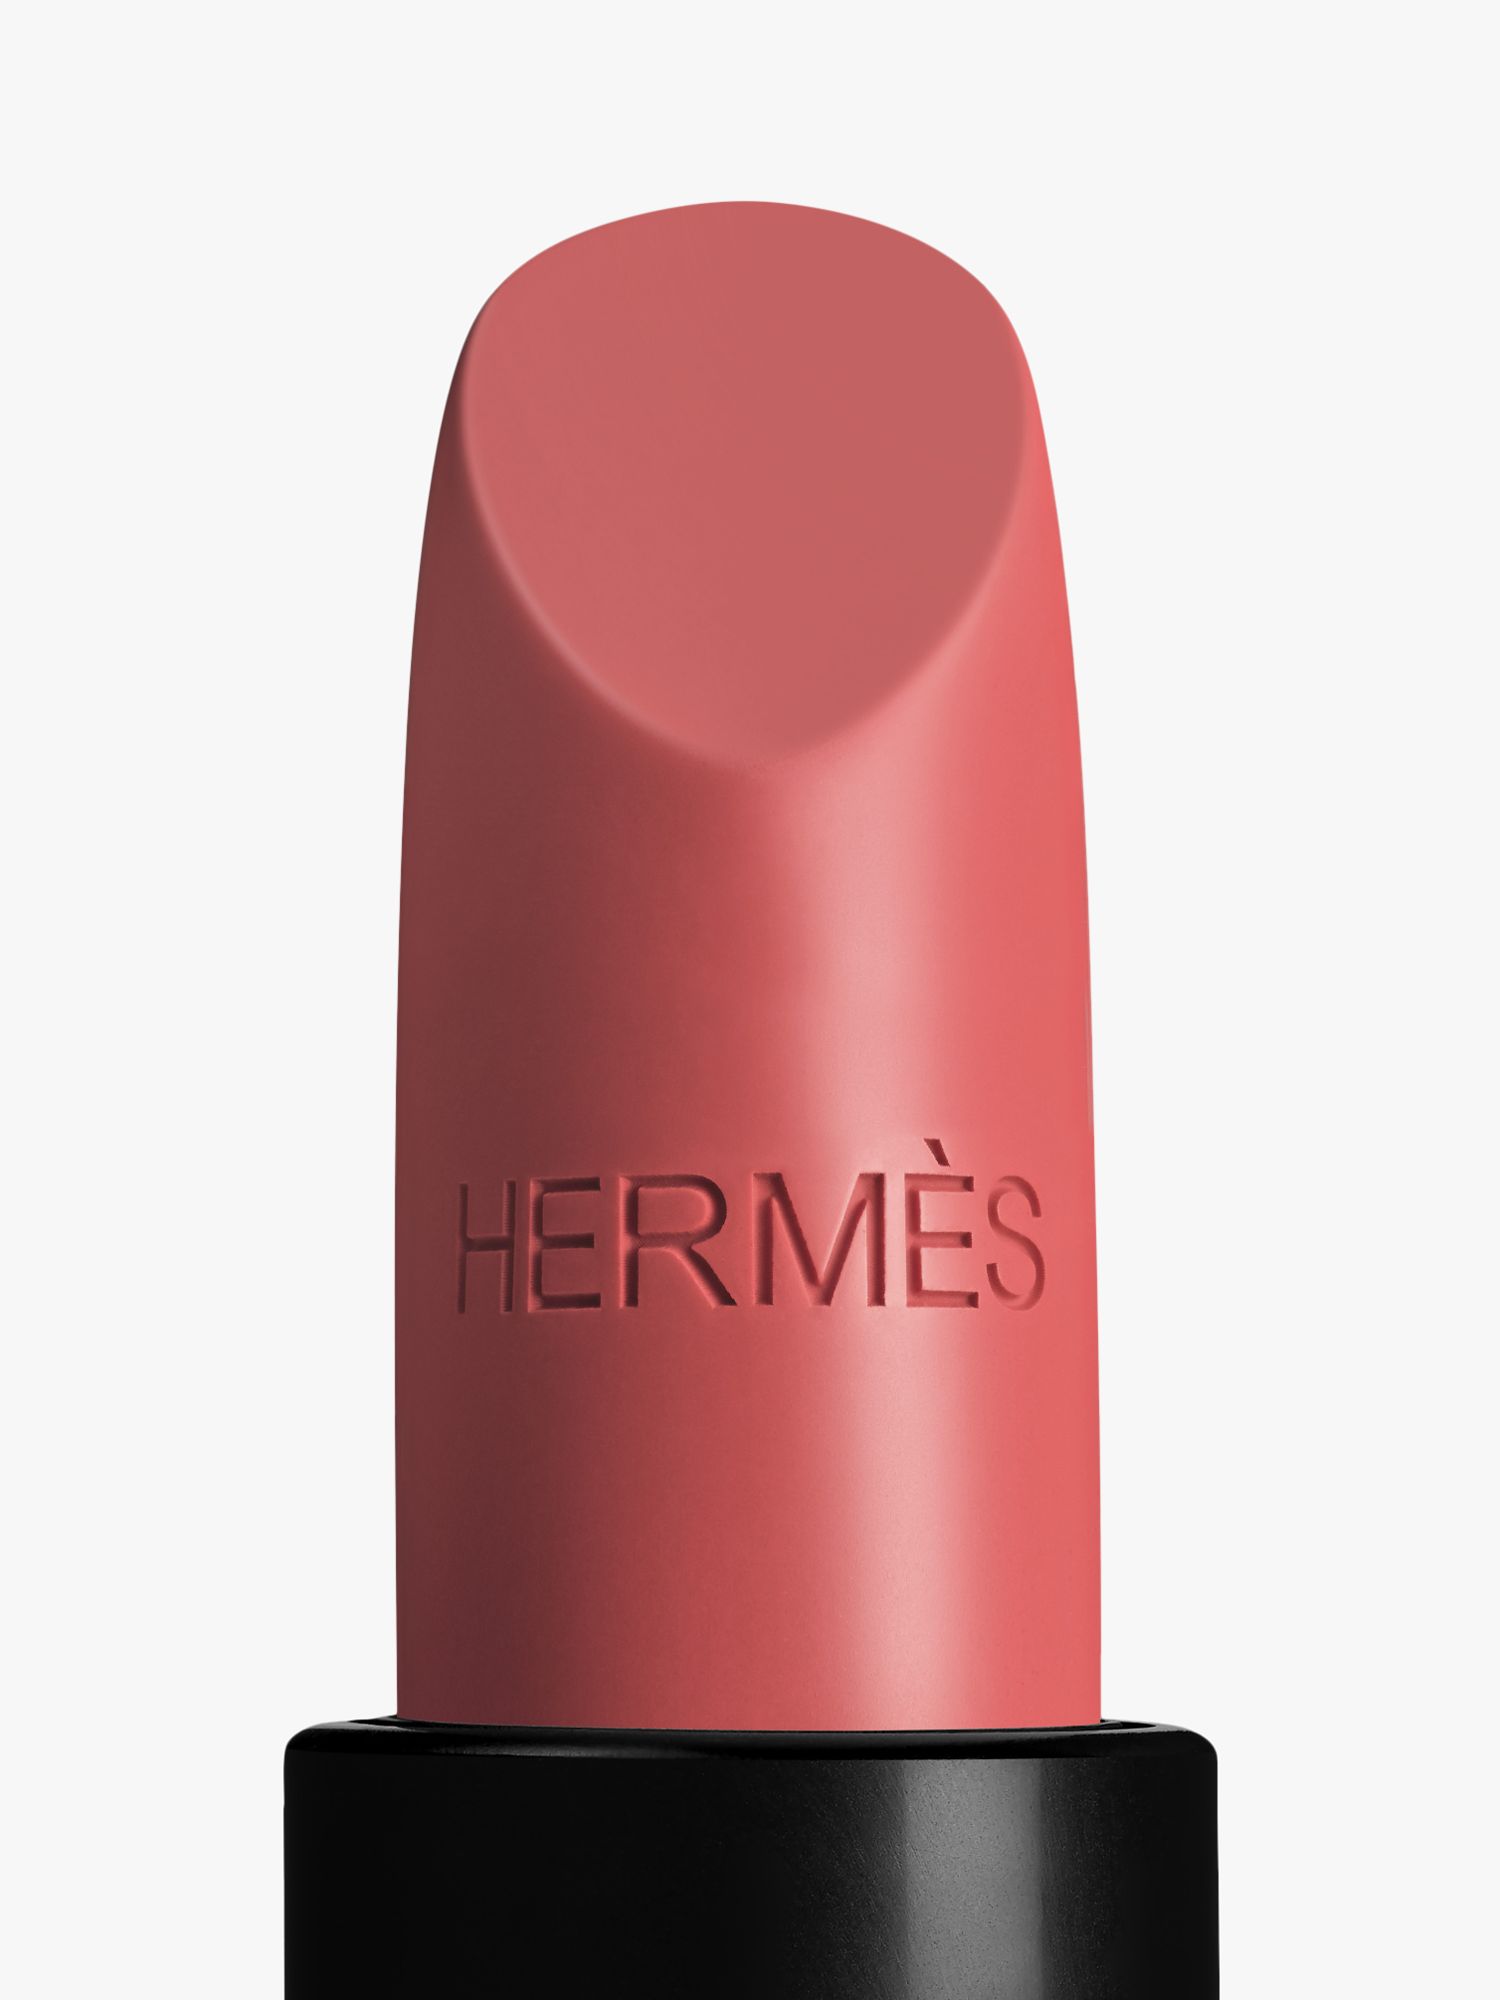 Hermès Rouge Hermès Satin Lipstick, 21 Rose Épicé 5